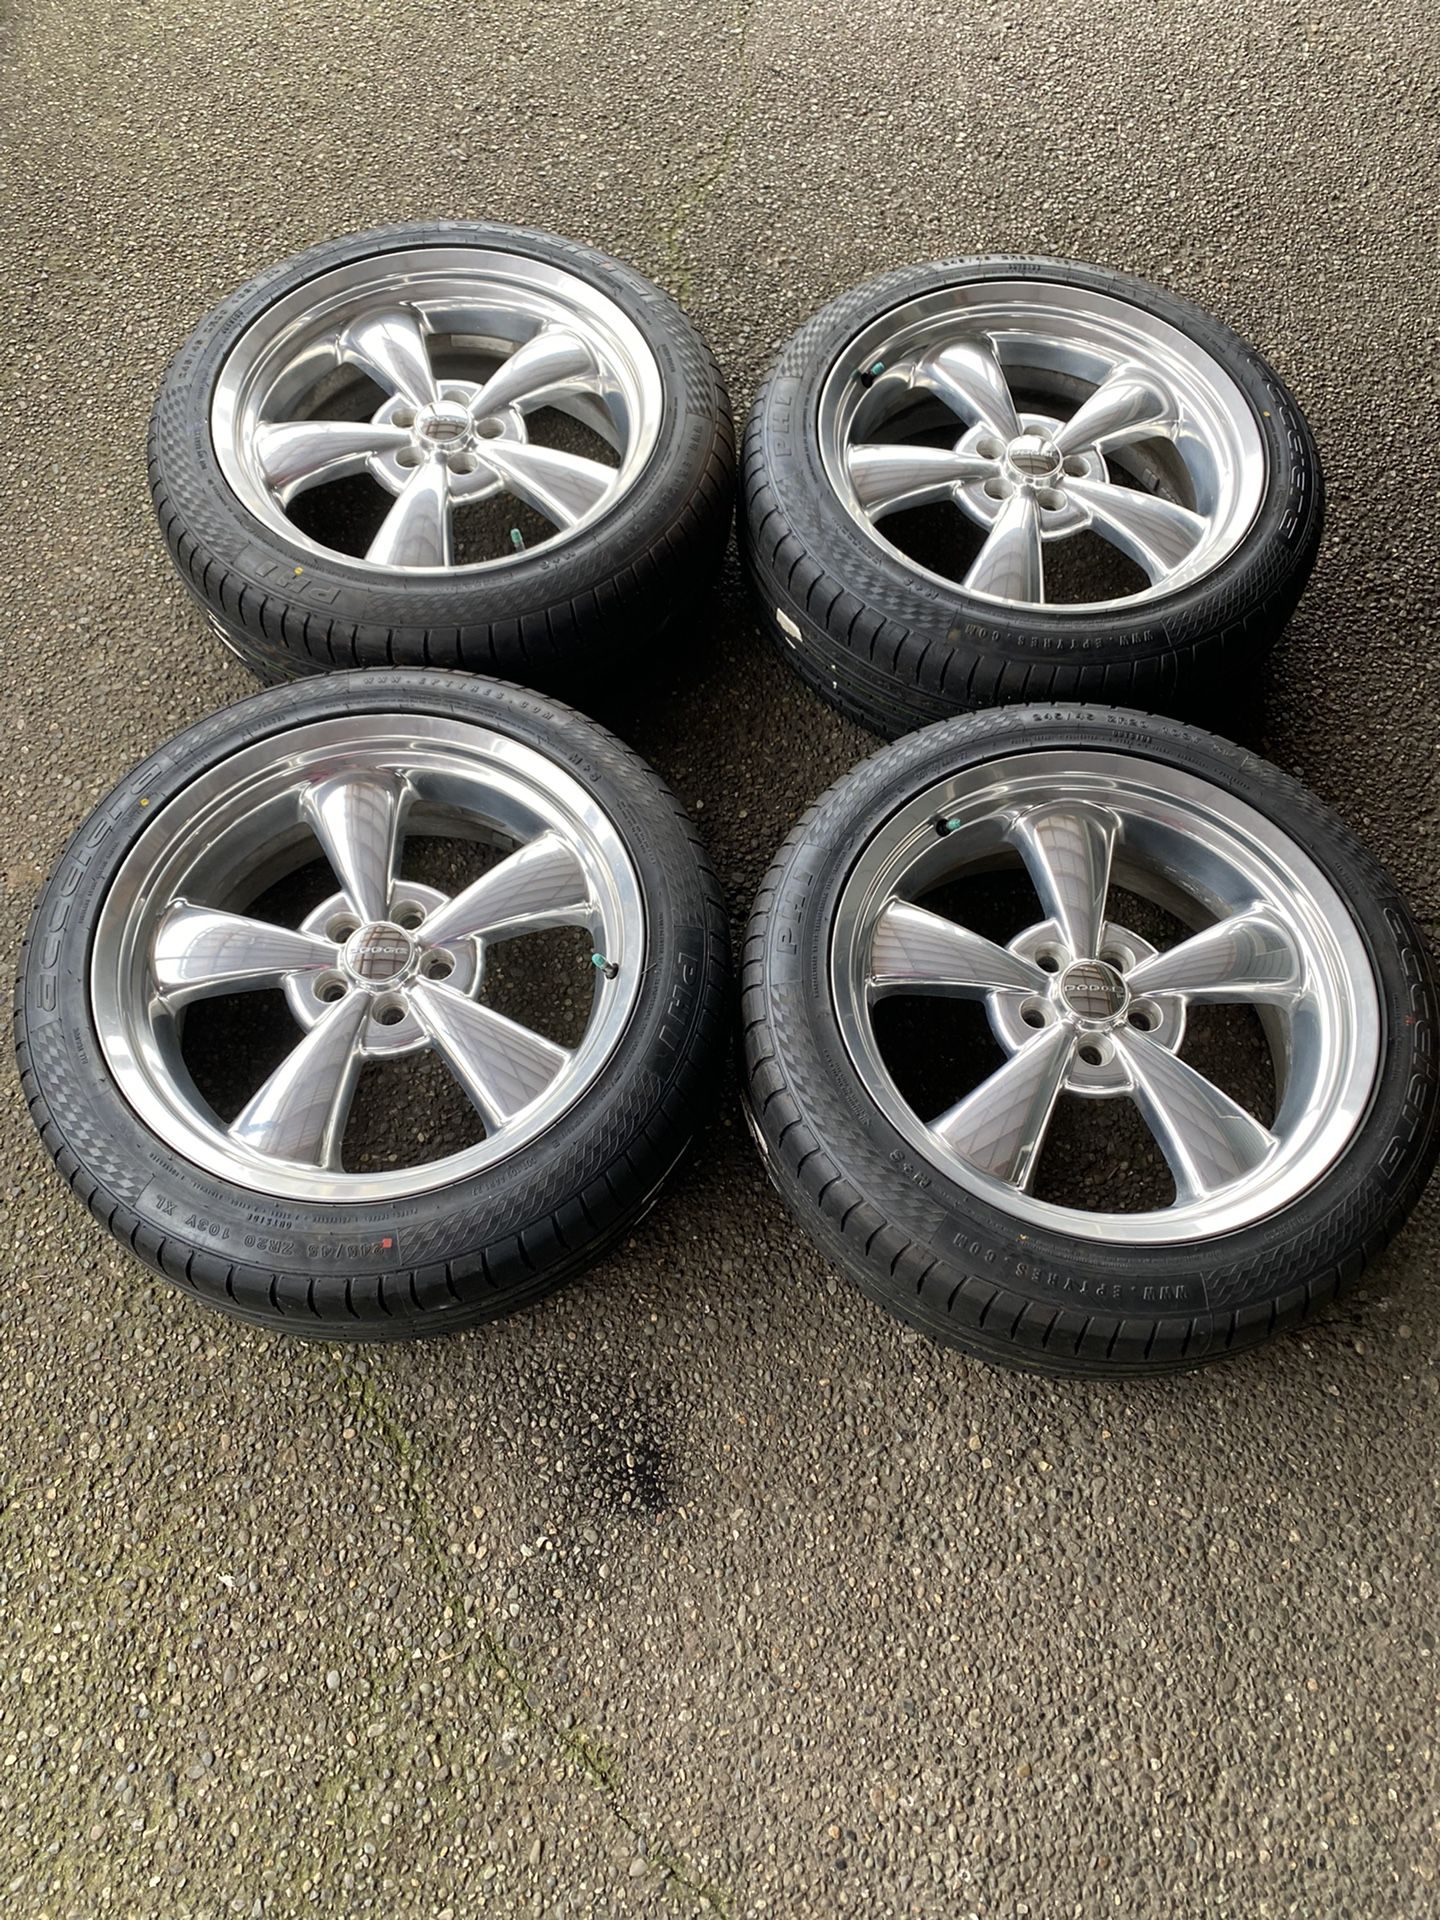 20” Dodge Challenger Wheels & New Tires 5x115